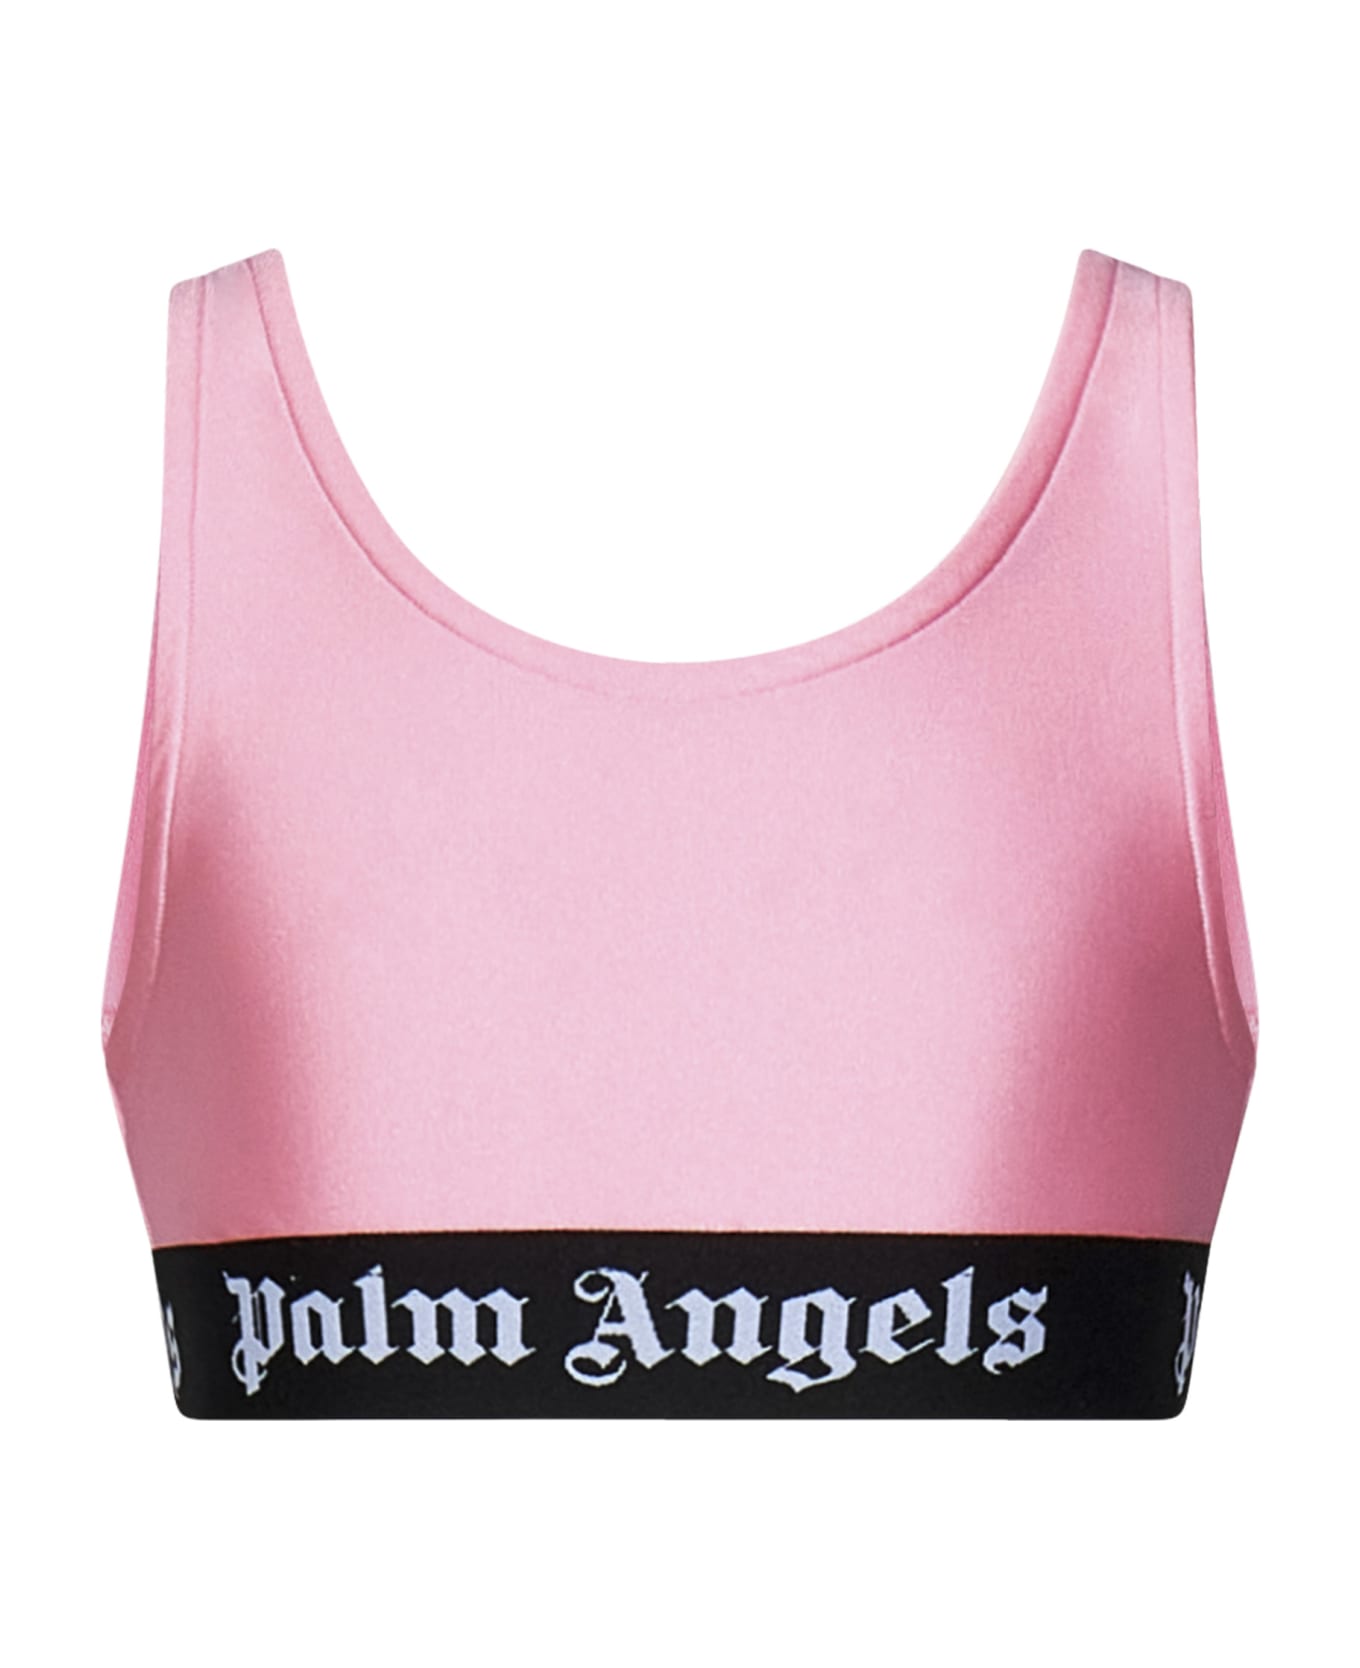 Palm Angels Kids Top - Pink